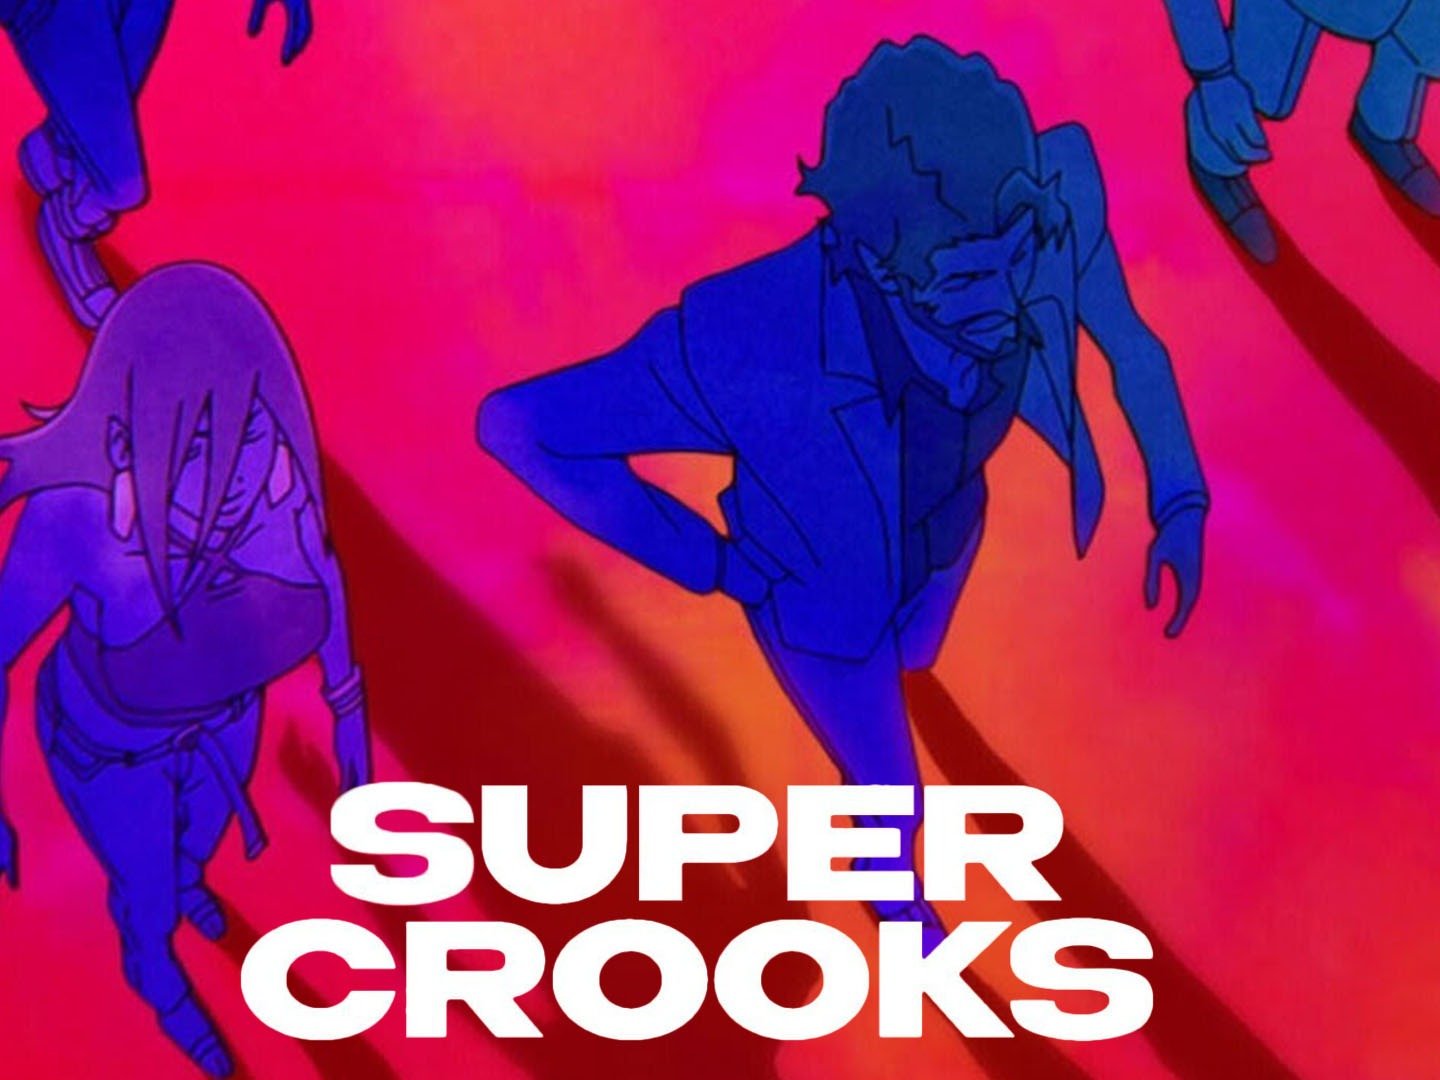 Super Crooks OP  ALPHA  TOWA TEI with Taprikk Sweezee  Netflix Anime   YouTube